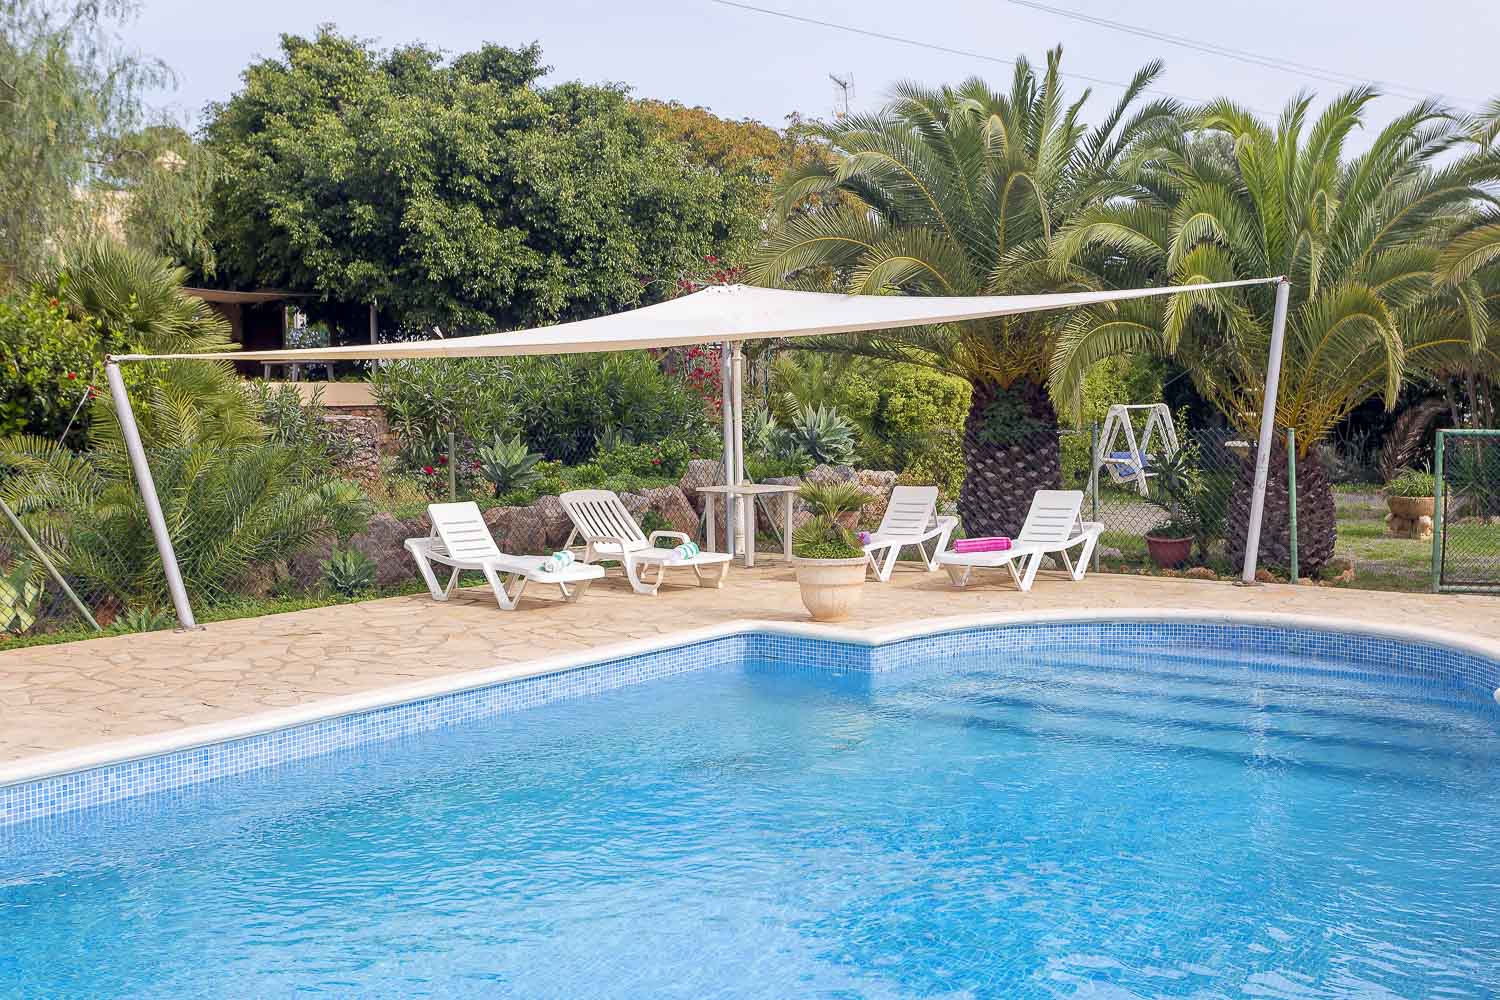 Pool zone in a rental house in Ibiza